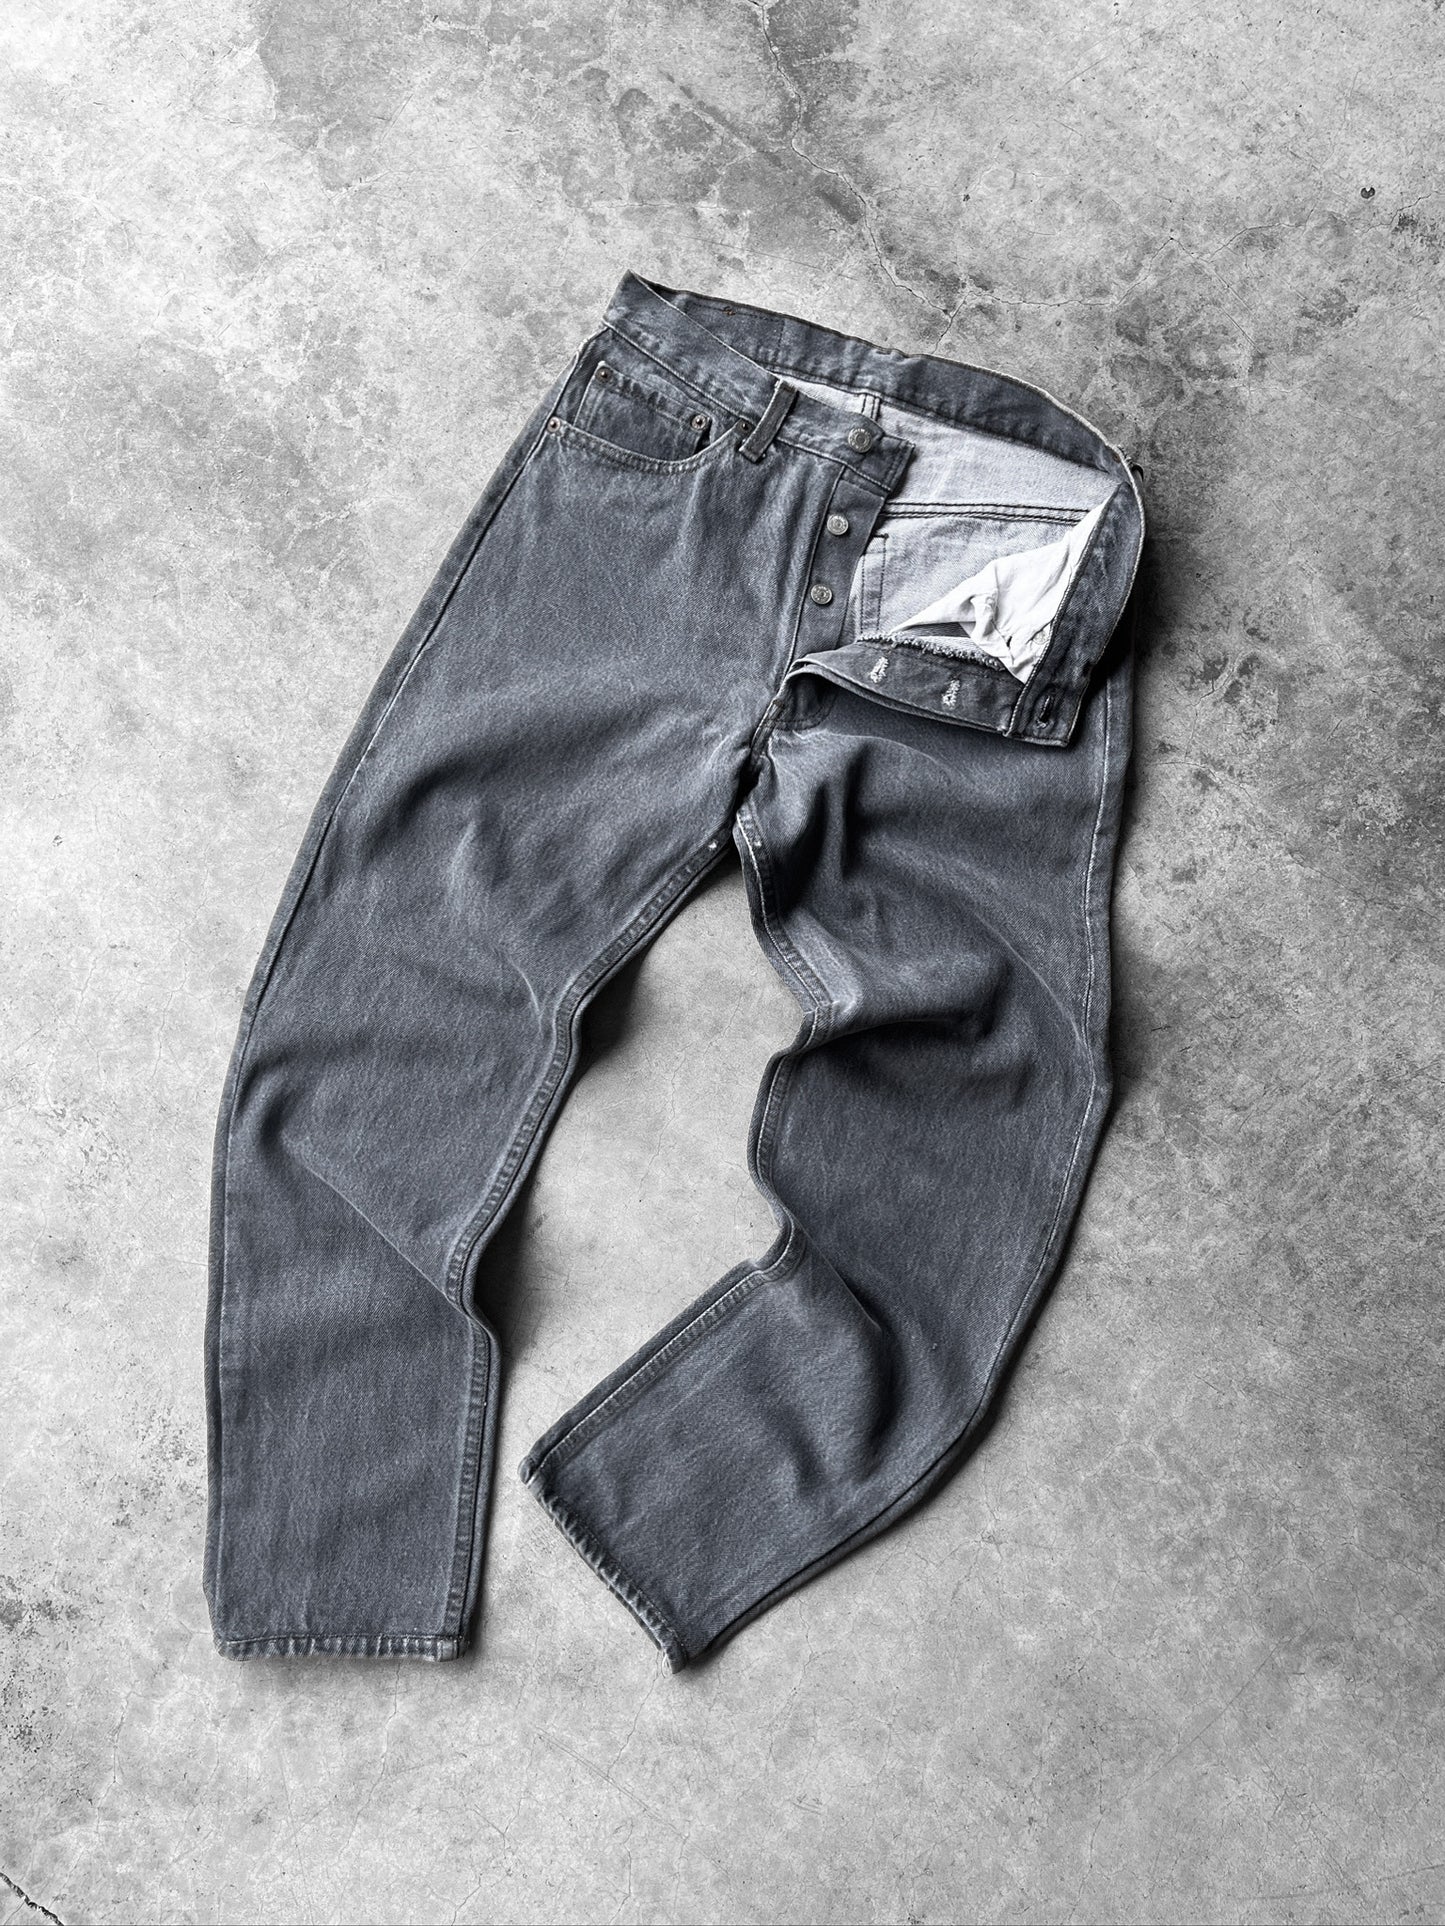 Levi’s 501 Denim Jeans - 29 x 34